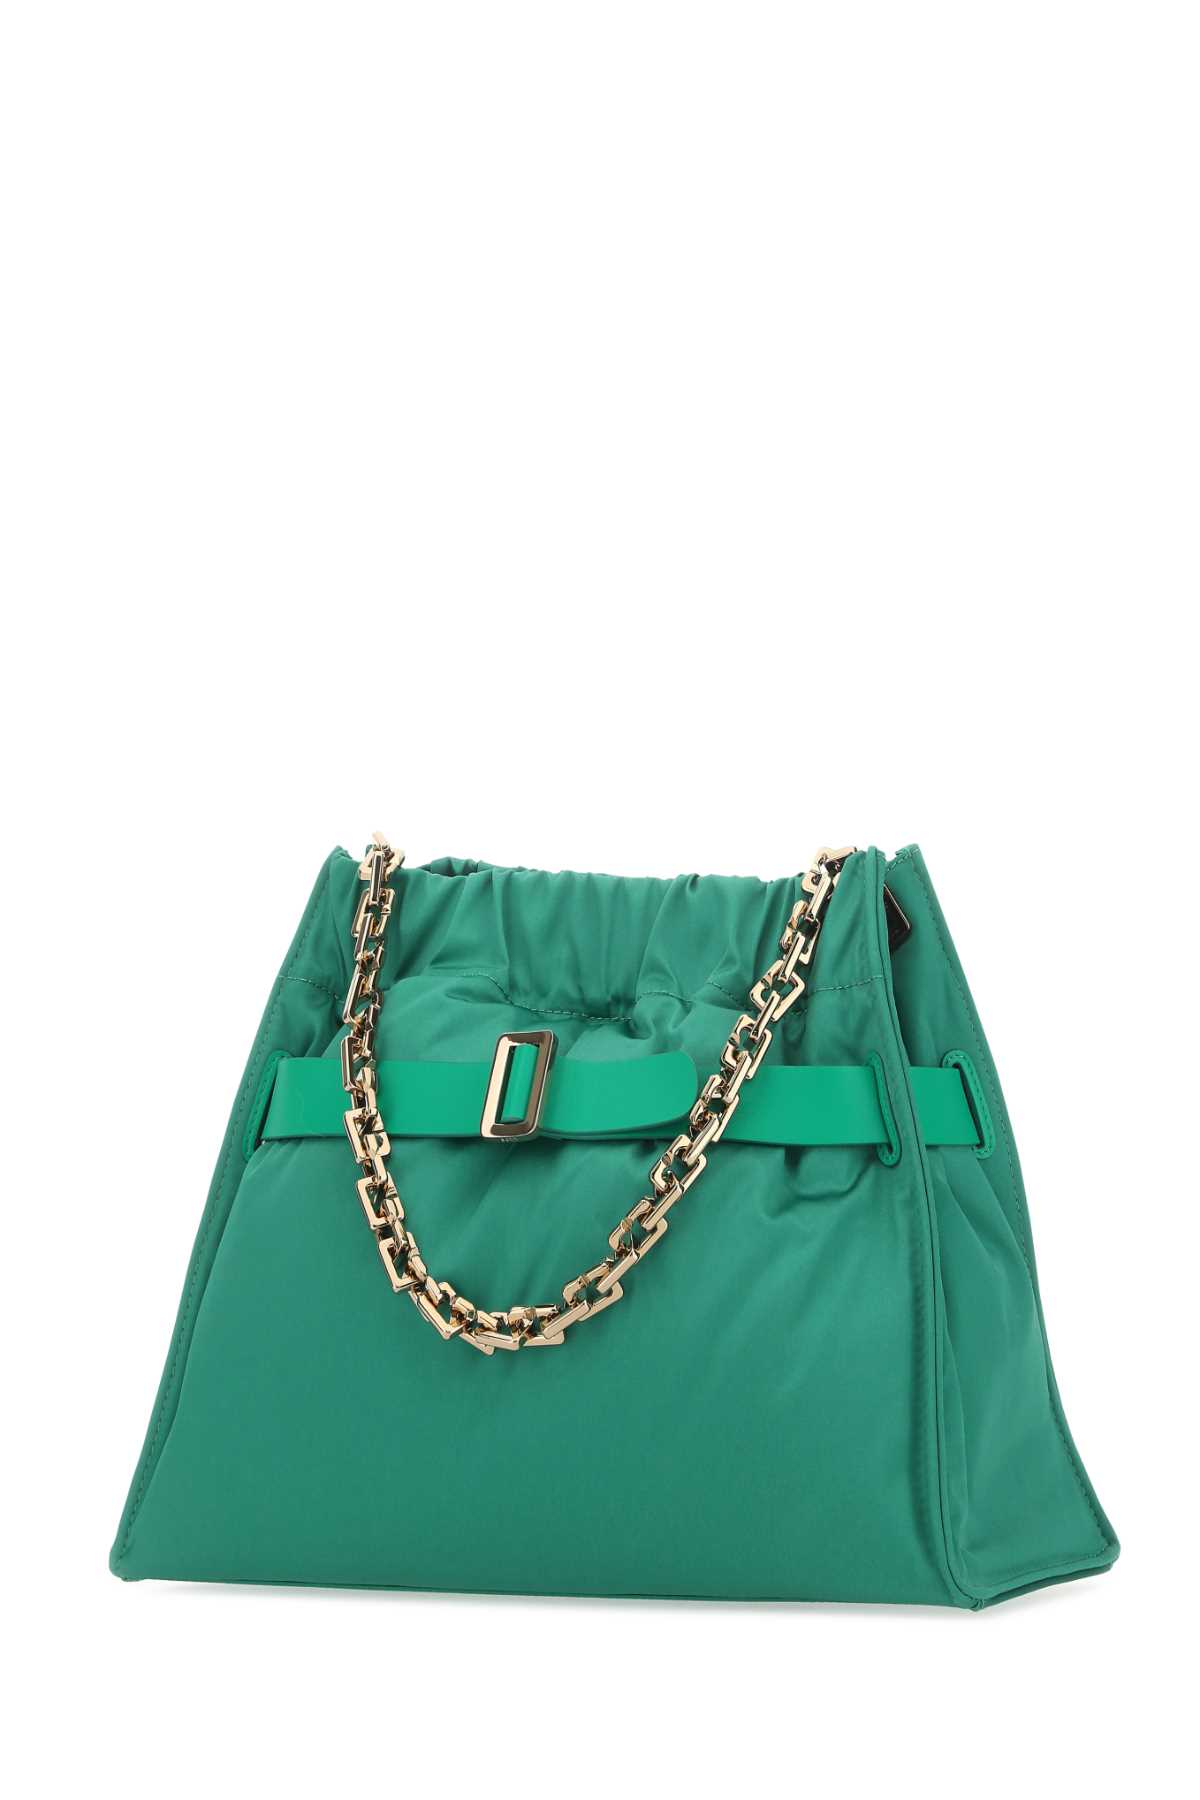 Boyy Emerald Green Nylon Scrunchy Jumbo Handbag